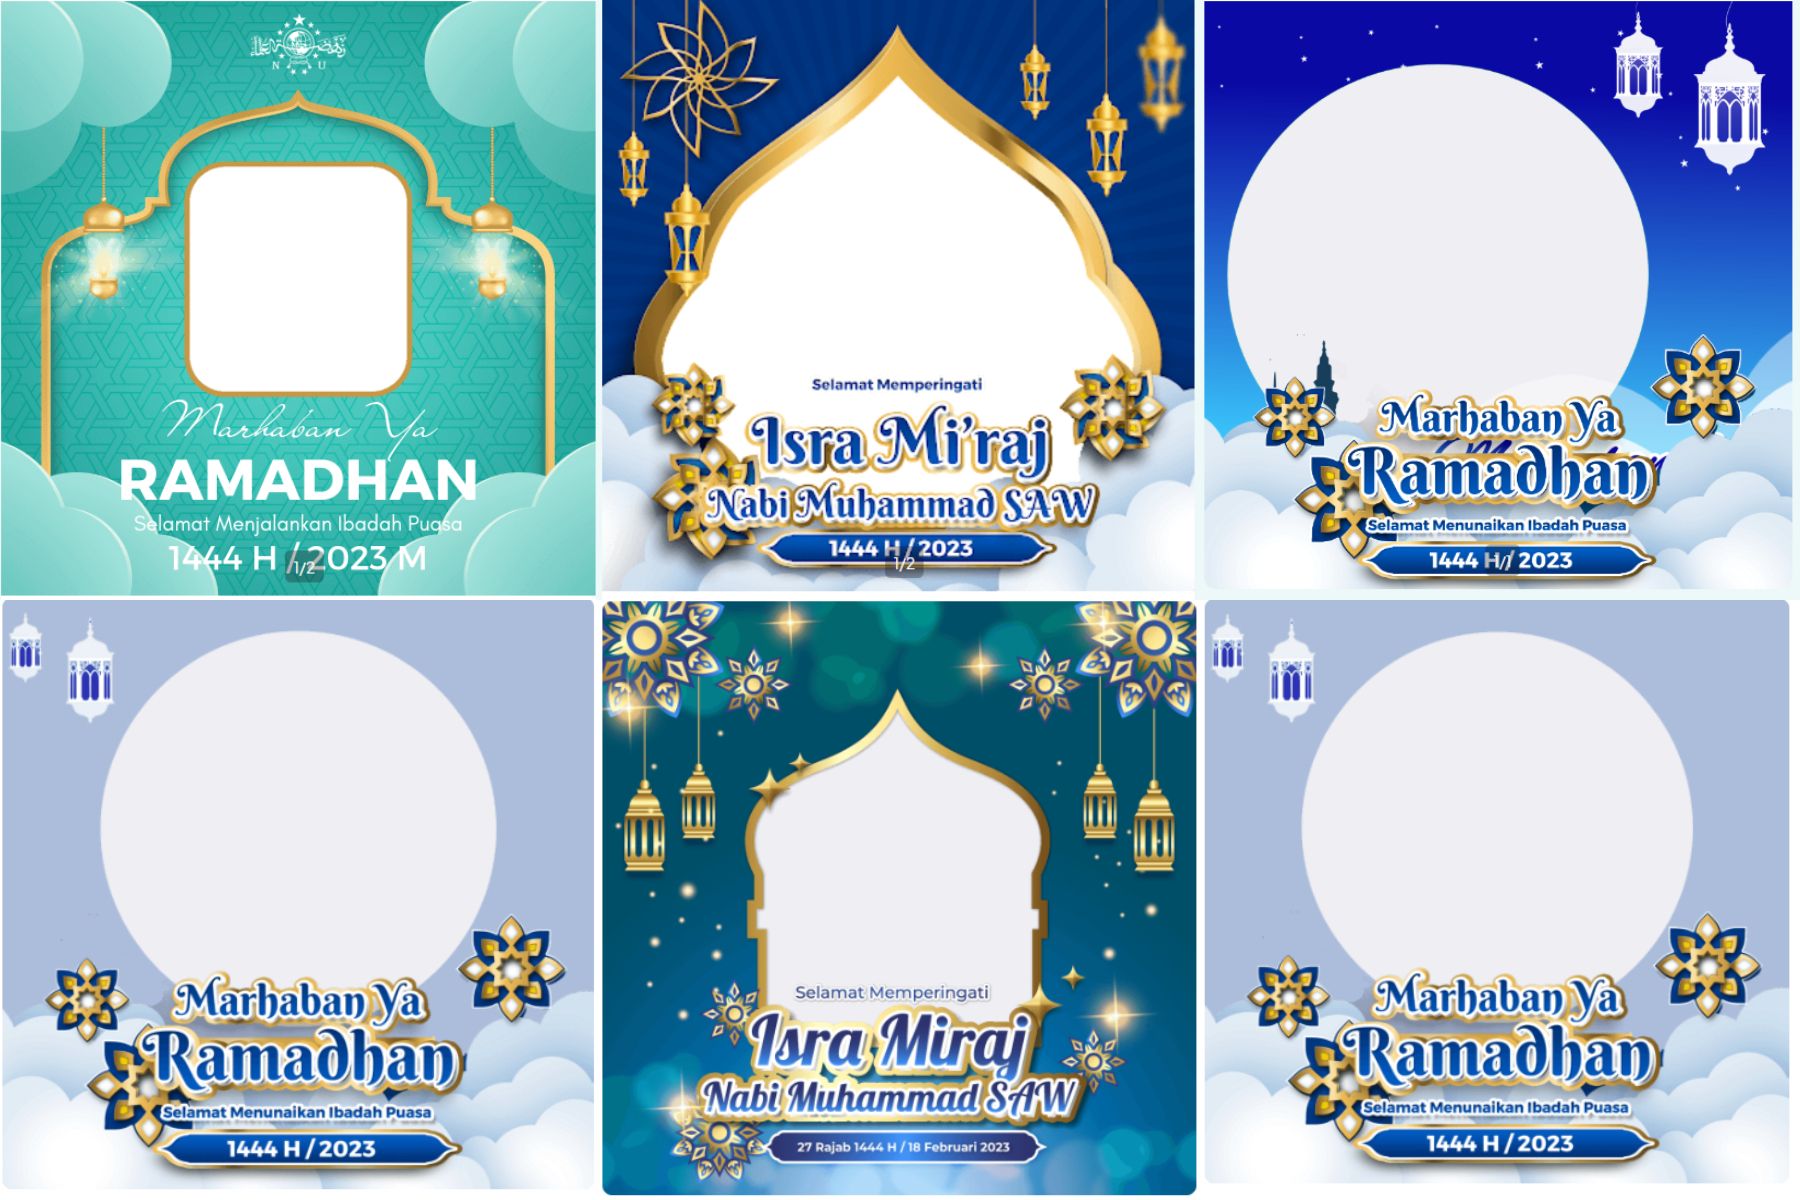 20 twibbon Ramadhan 2023 ucapan marhaban ya ramadhan kartun, cara membuat di twibbonize.com dan link download bingkai Ramadan 1444 H gratis.